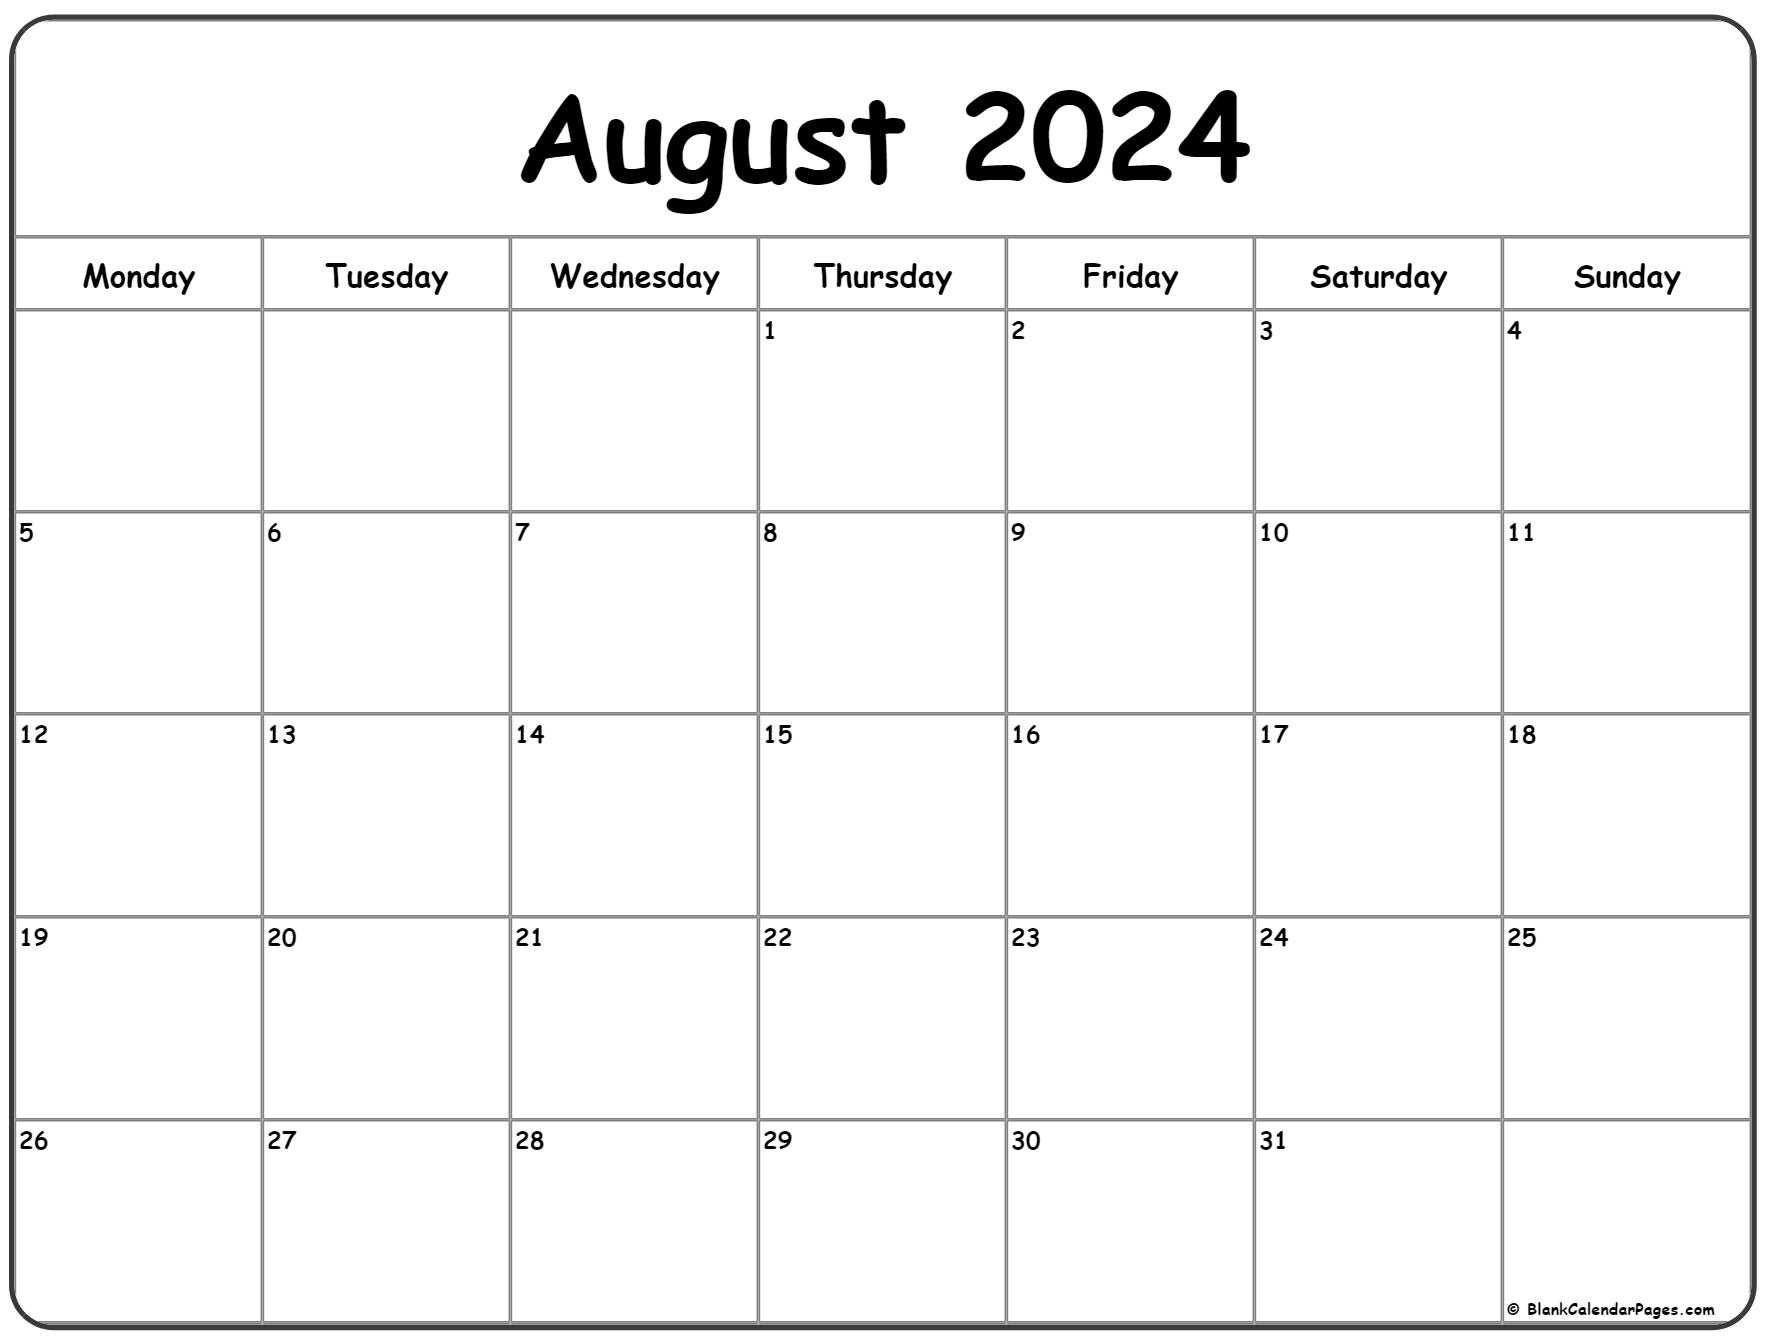 August 2024 Monday Calendar | Monday To Sunday for Printable Calendar 2024 August